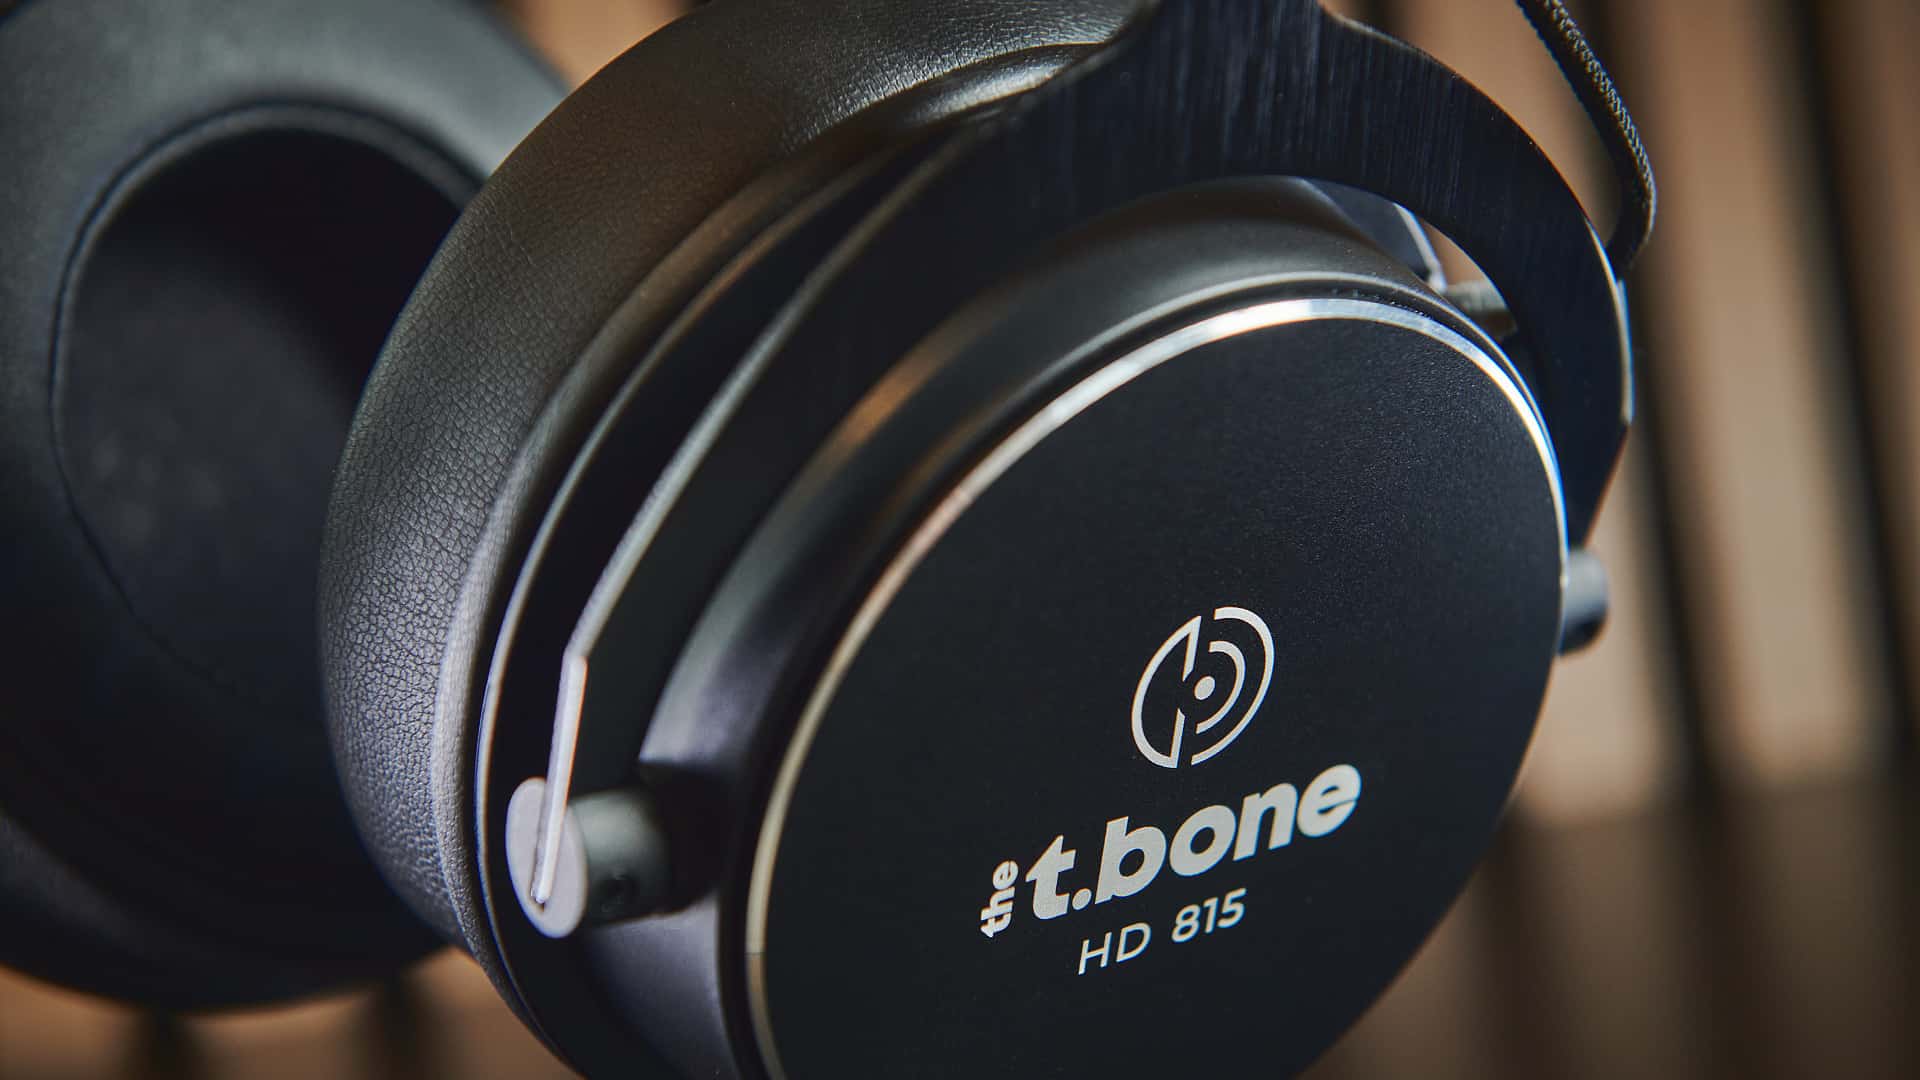 the t.bone HD 815